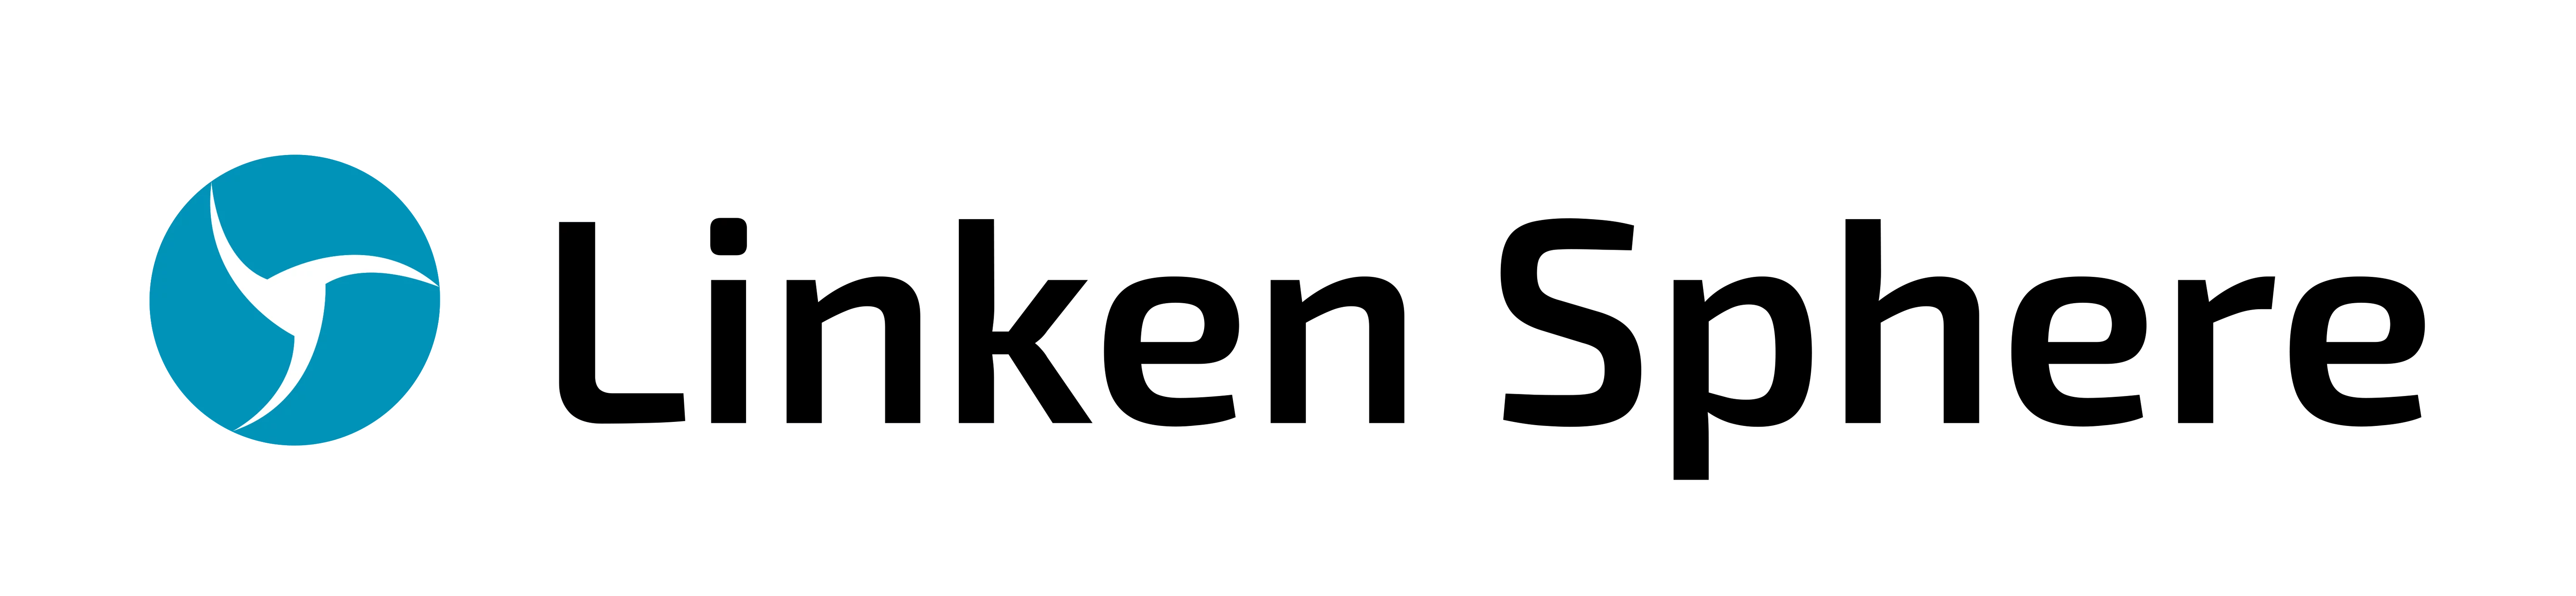 Linken Sphere and Proxidize Logo